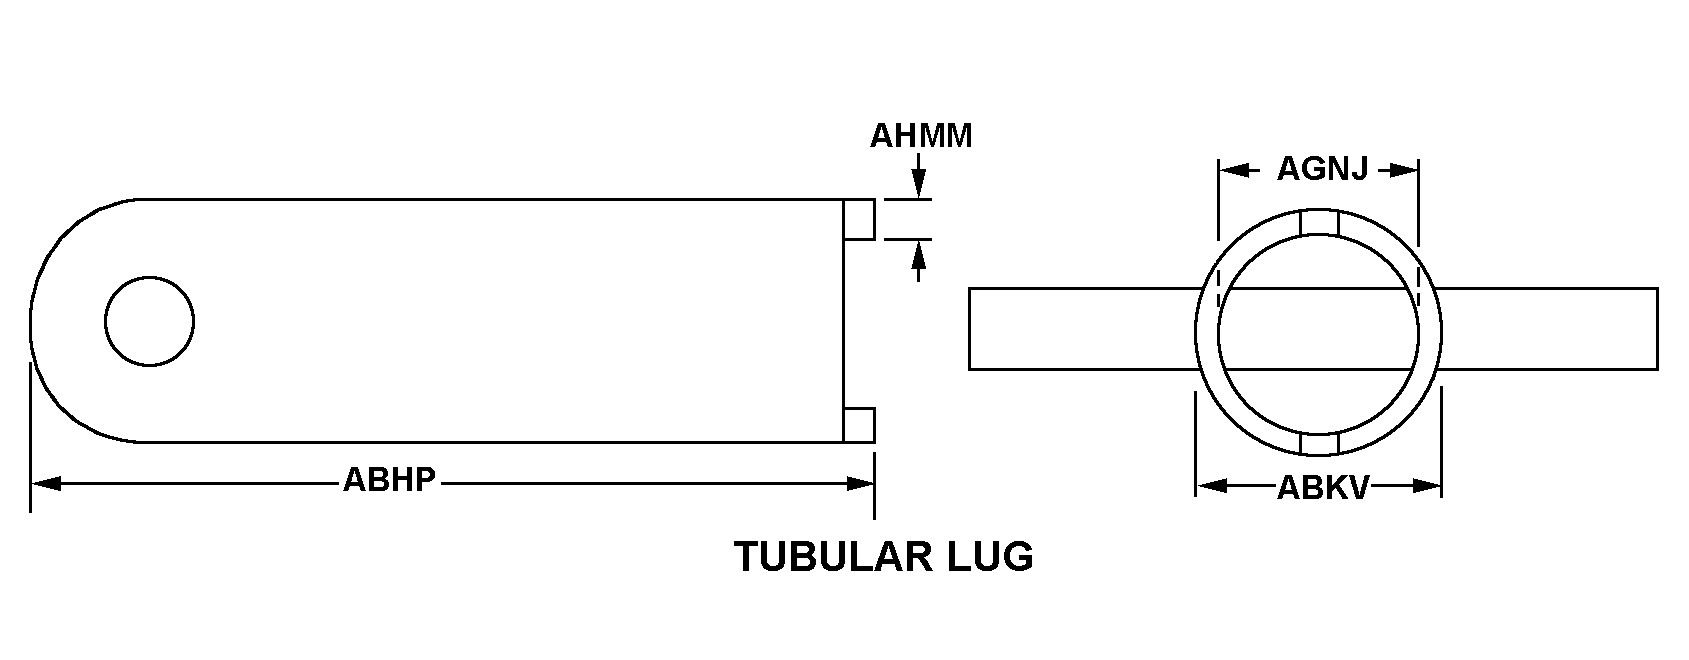 TUBULAR LUG style nsn 5120-01-459-5494